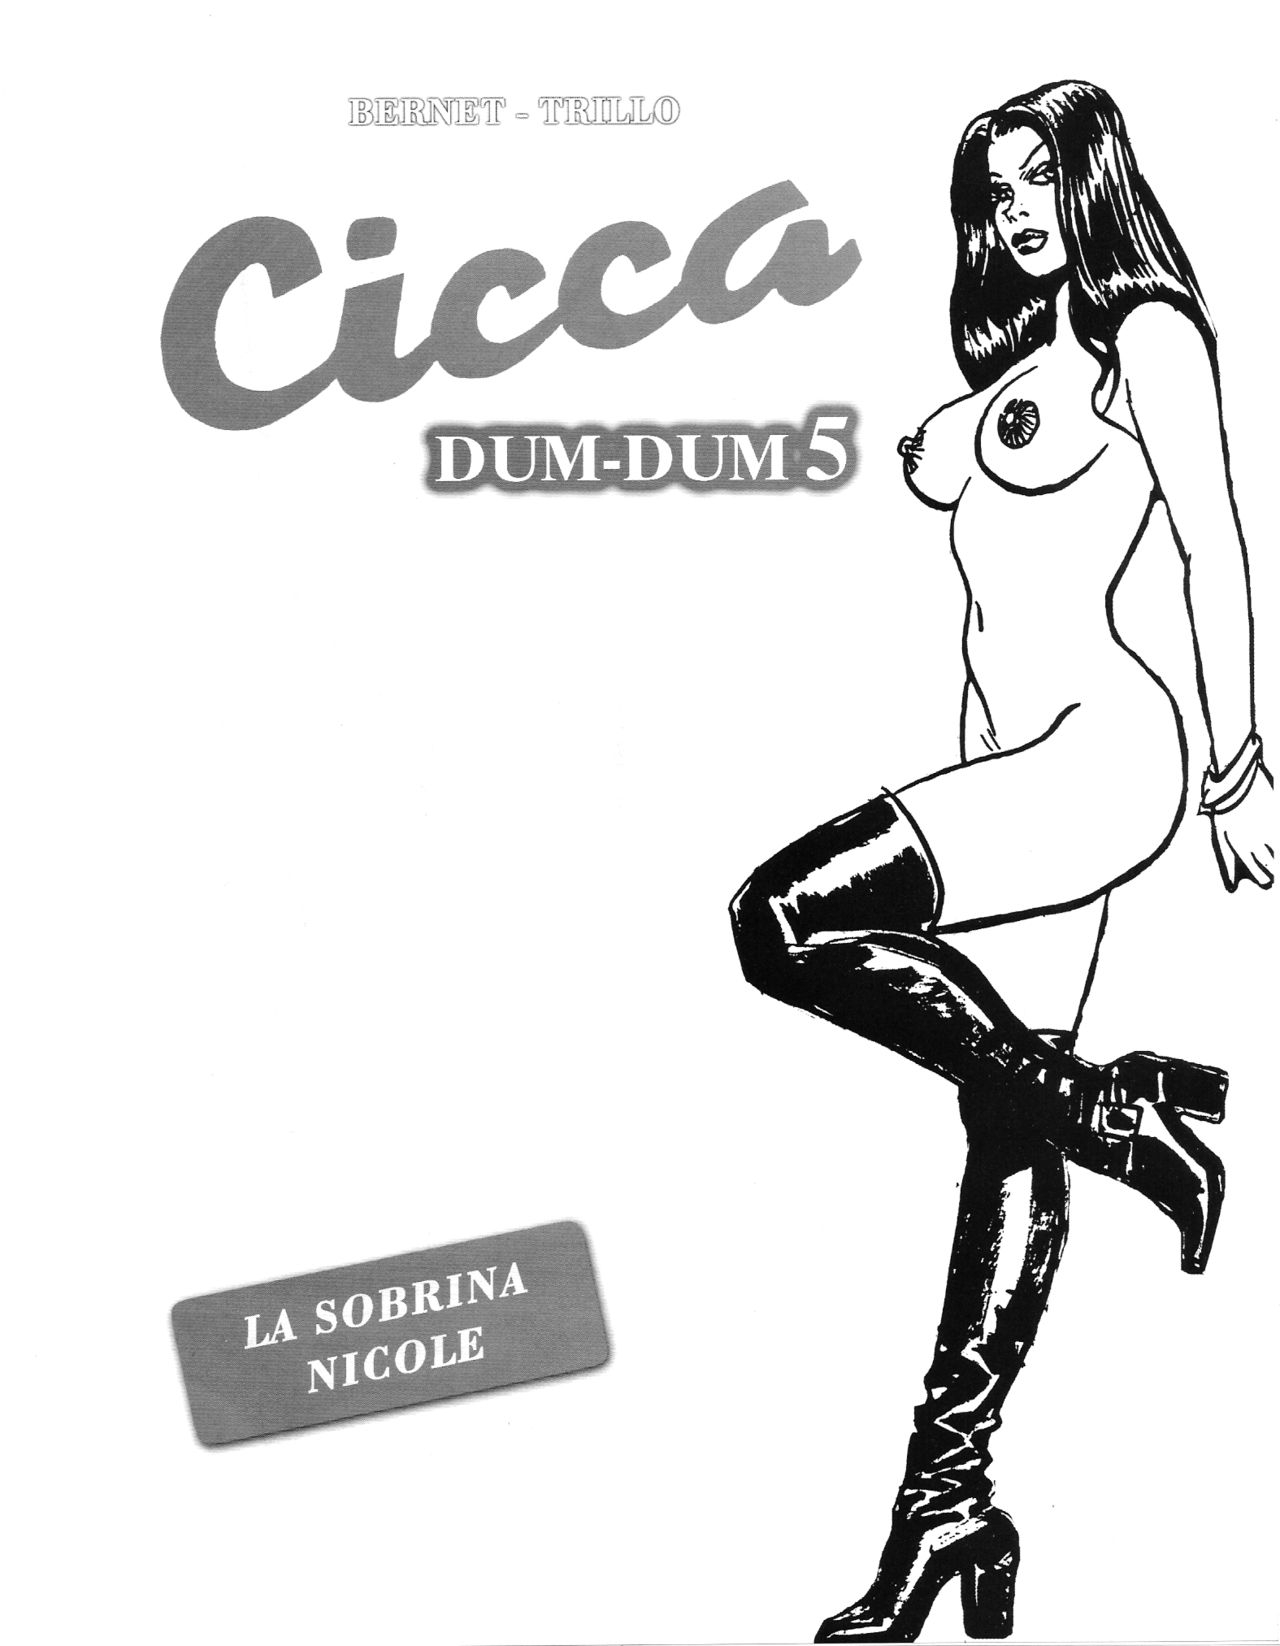 [Jordi Bernet] Cicca Dum-Dum 5 - La Sobrina Nicole [Spanish] 1